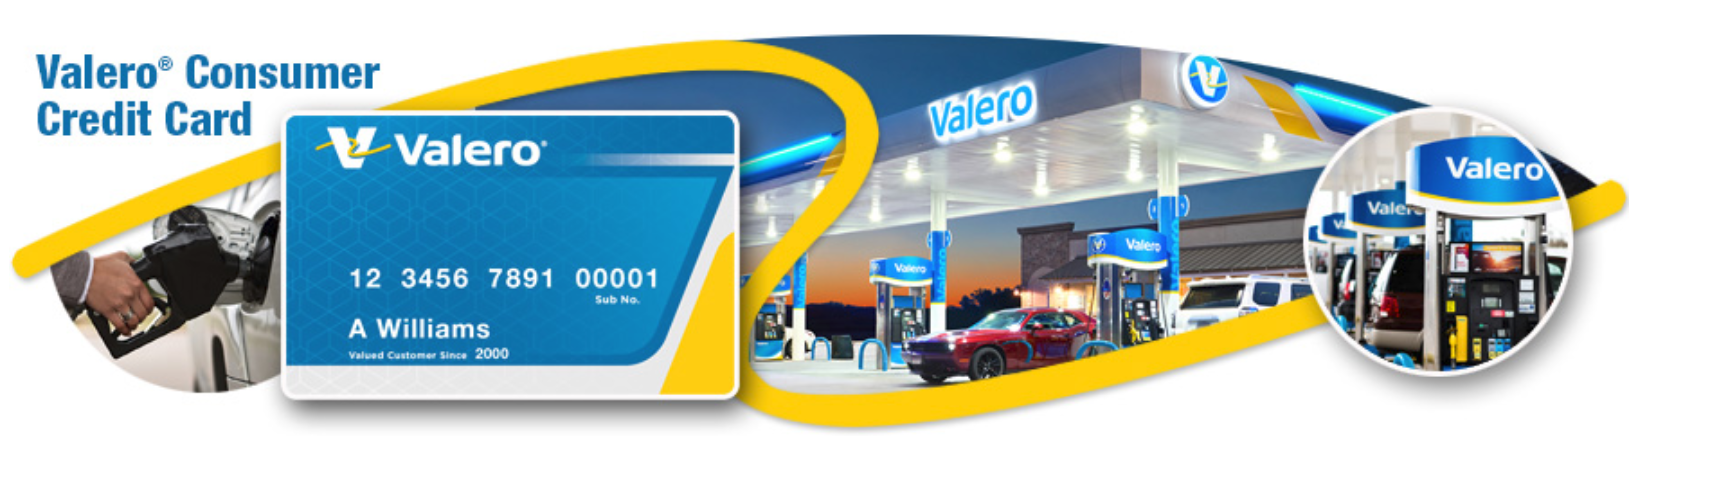 valero.com/creditcard